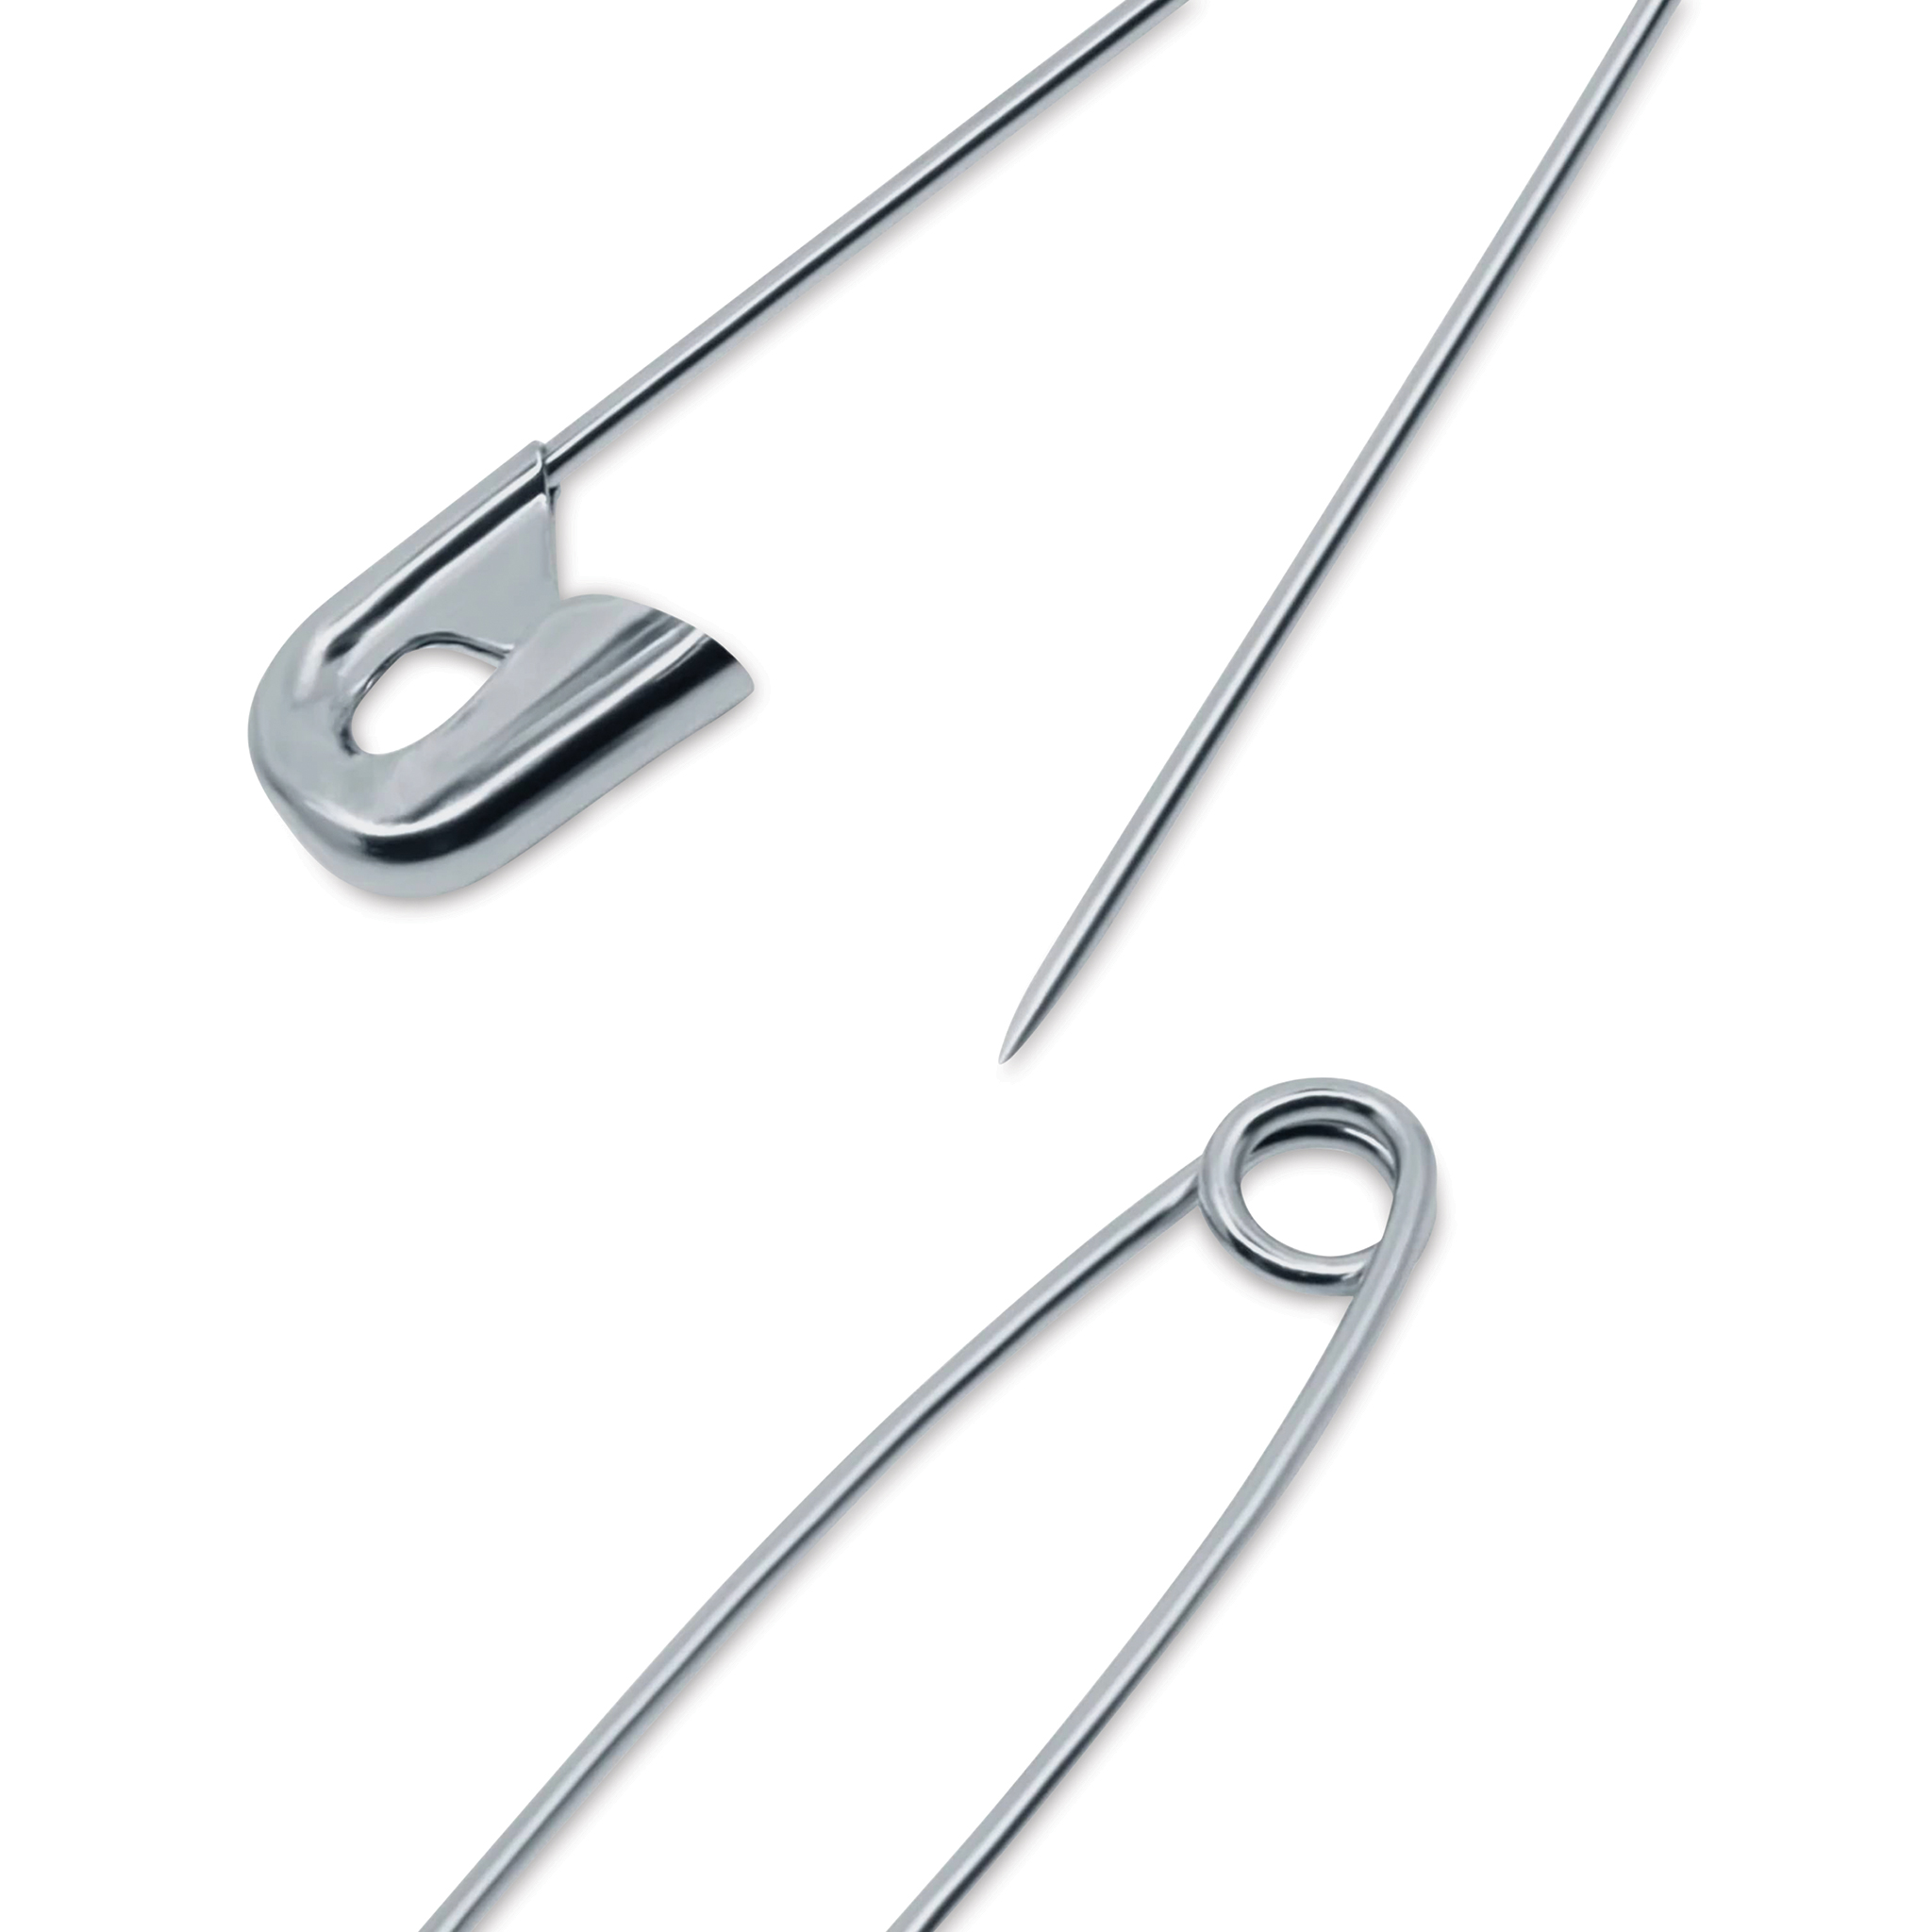 Dritz® Pins - Safety Pins, Size 2 - 10 Ct.